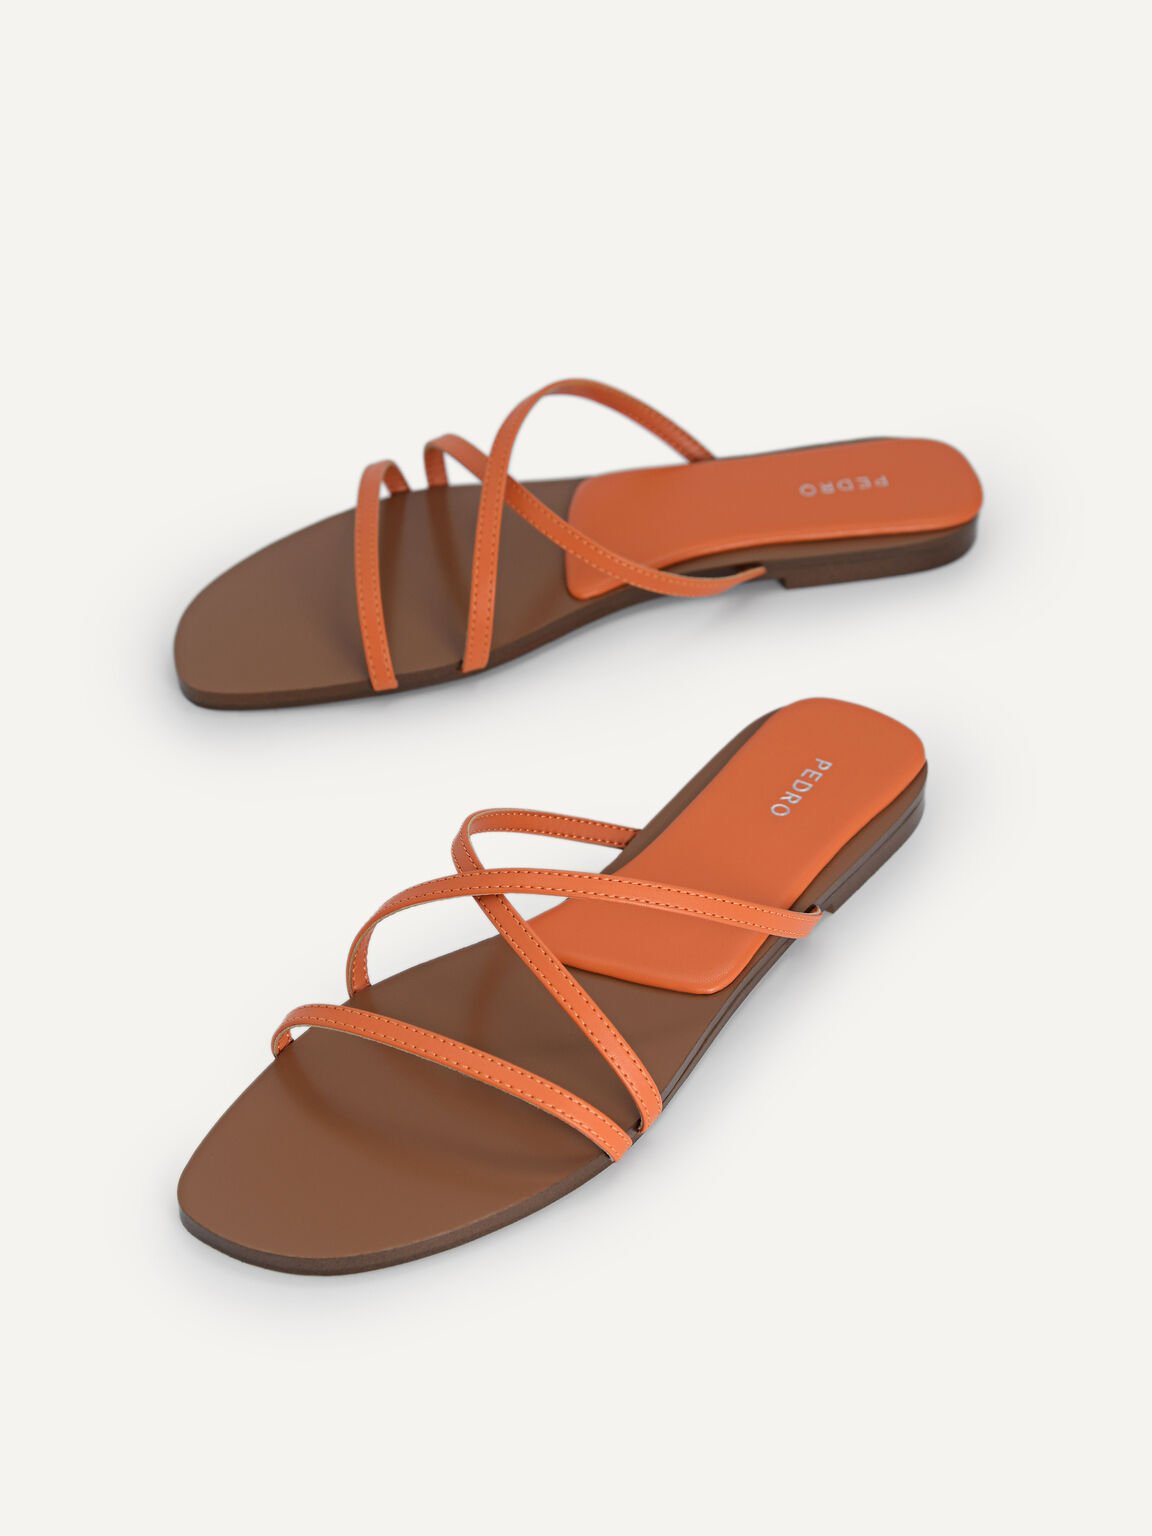 Criss-Cross Strappy Sandals, Orange